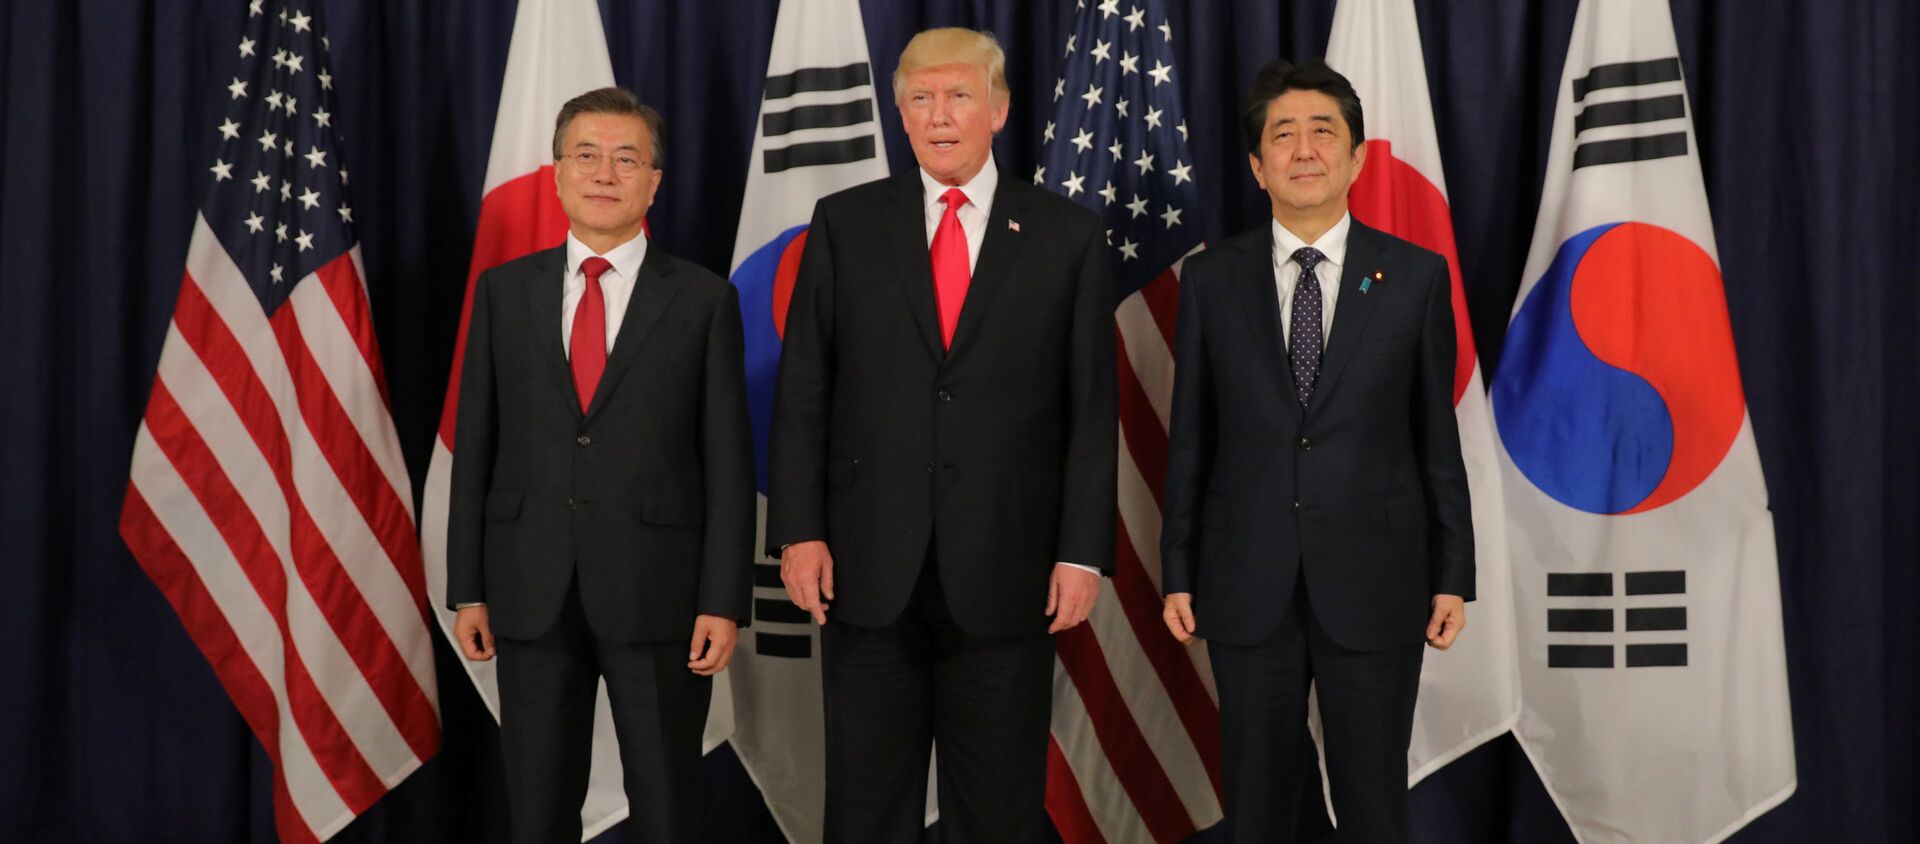 US President Donald Trump meets South Korea's President Moon Jae-In and Japanese Prime Minister Shinzo Abe ahead the G20 leaders summit in Hamburg, Germany July 6, 2017. - Sputnik International, 1920, 11.02.2019